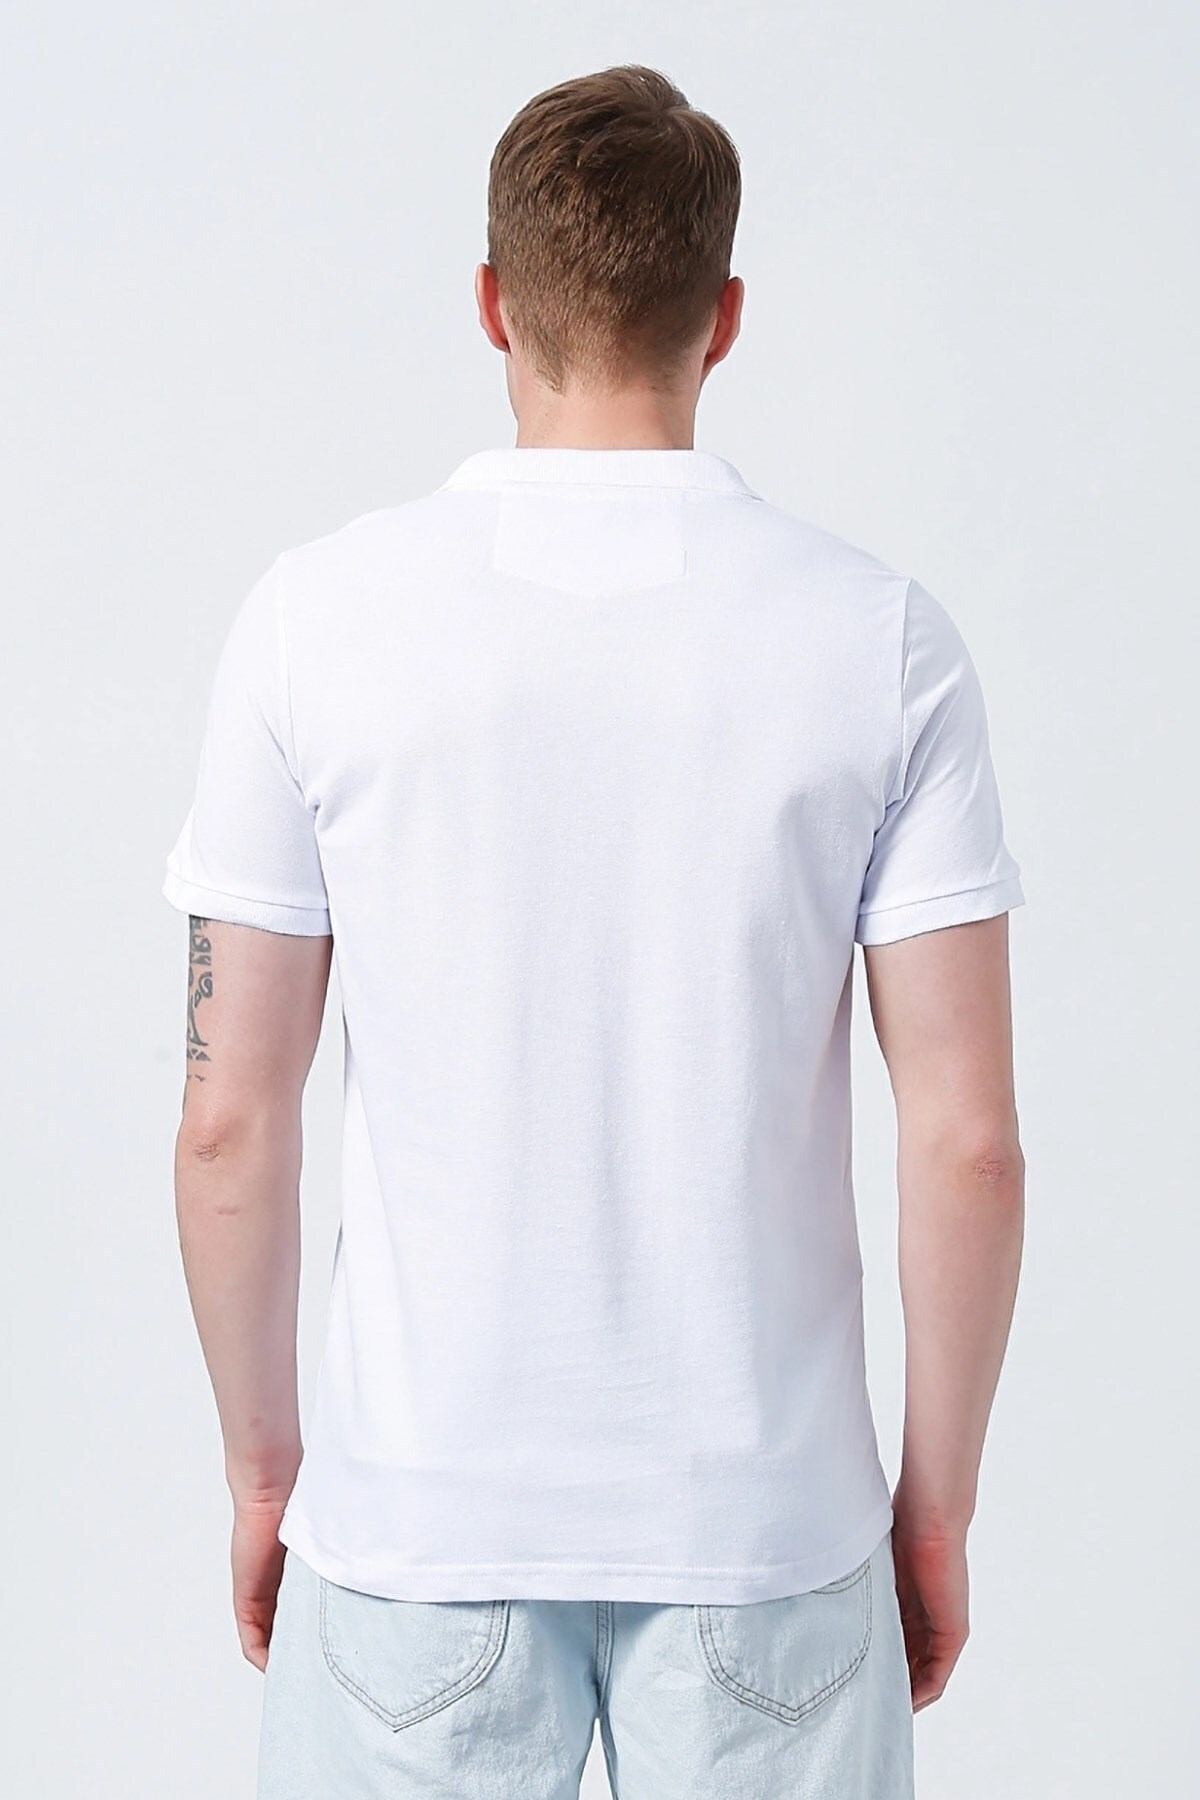 Lee Cooper Erkek T-Shirt 222 LCM 242077 Beyaz